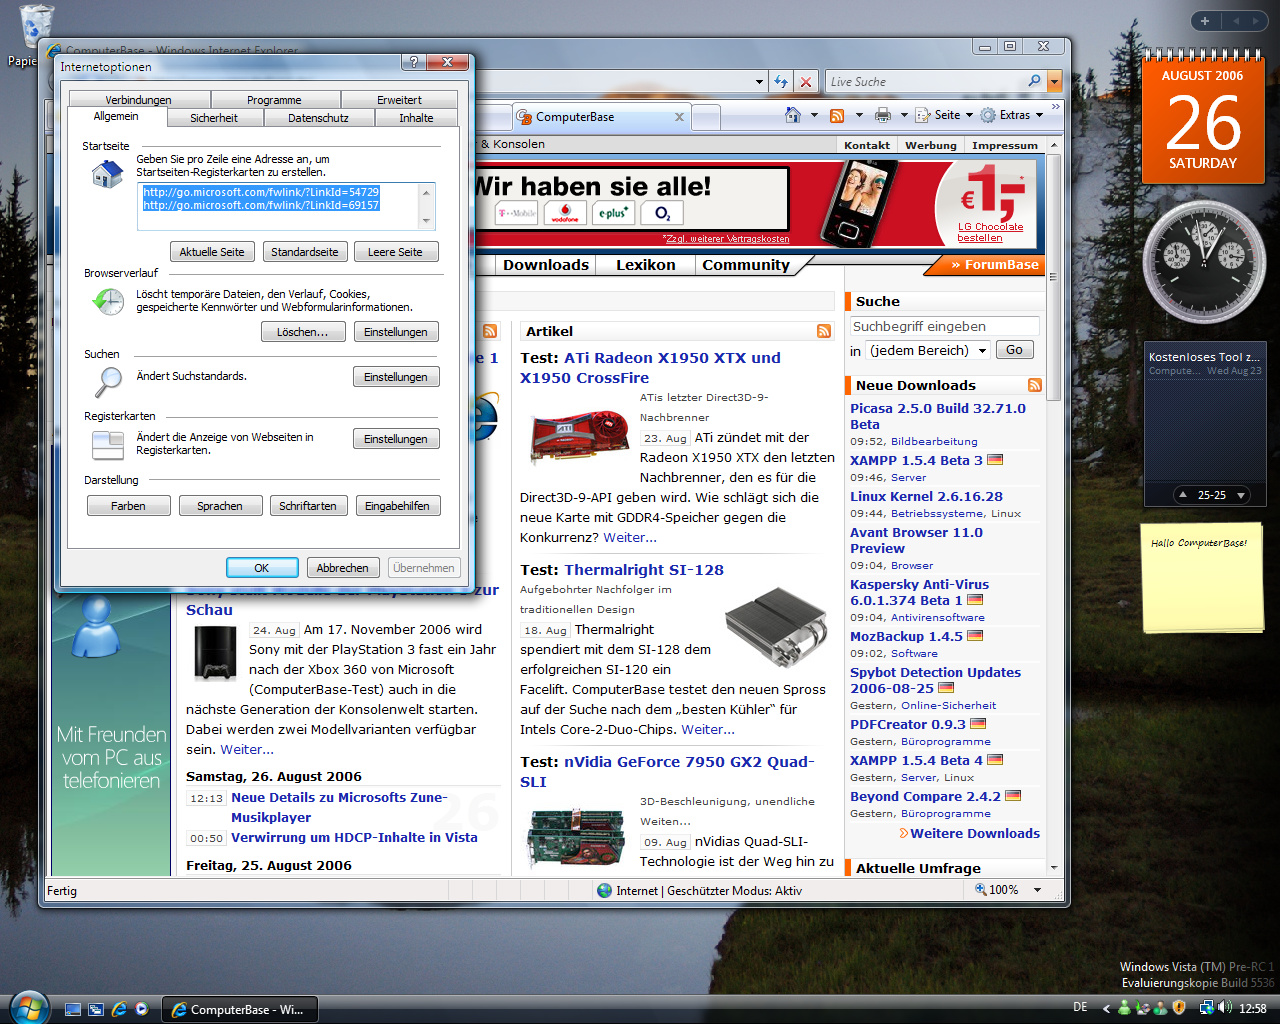 Windows Vista Build 5536 - Internet Explorer 7.0